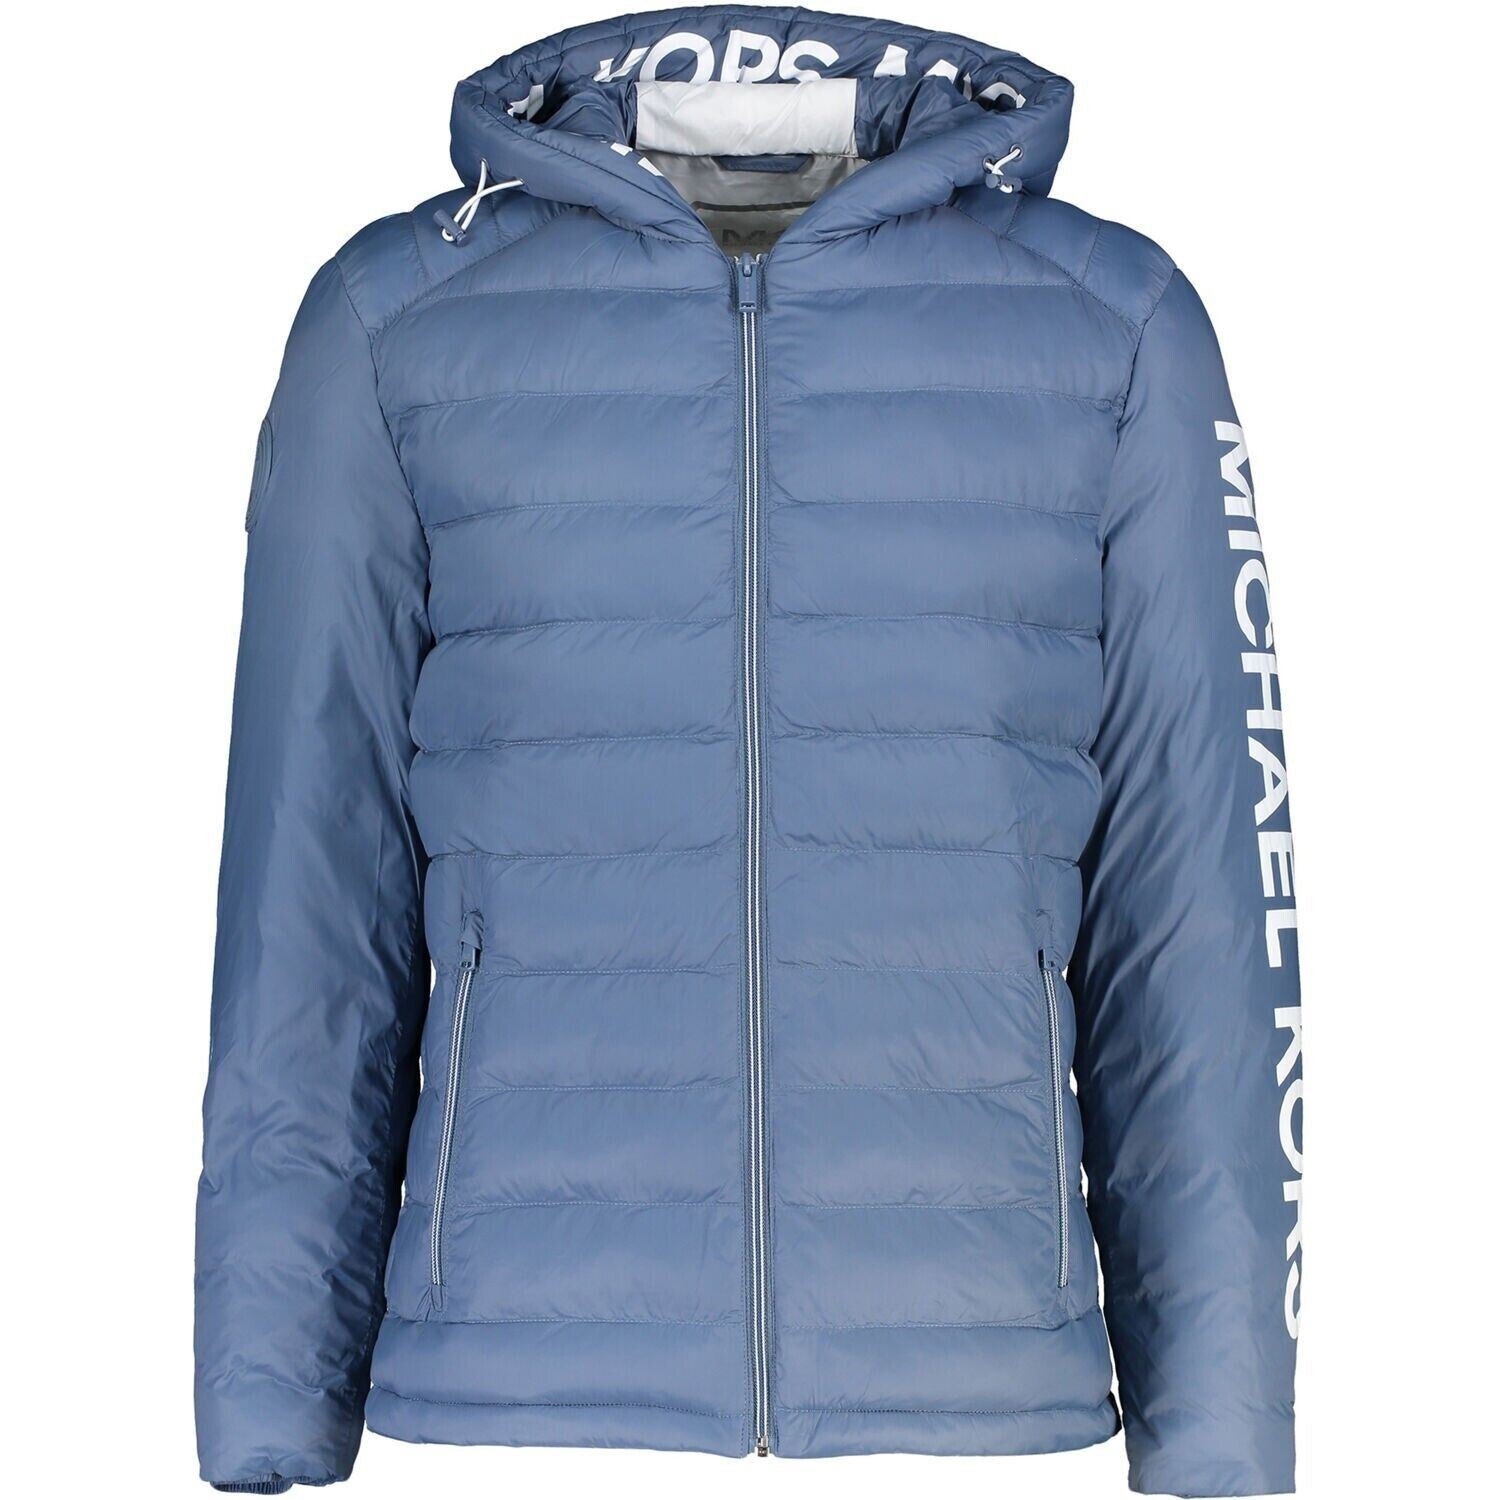 MICHAEL KORS Men's Lightly Padded Hooded Wind-proof Jacket, Blue, size LARGE